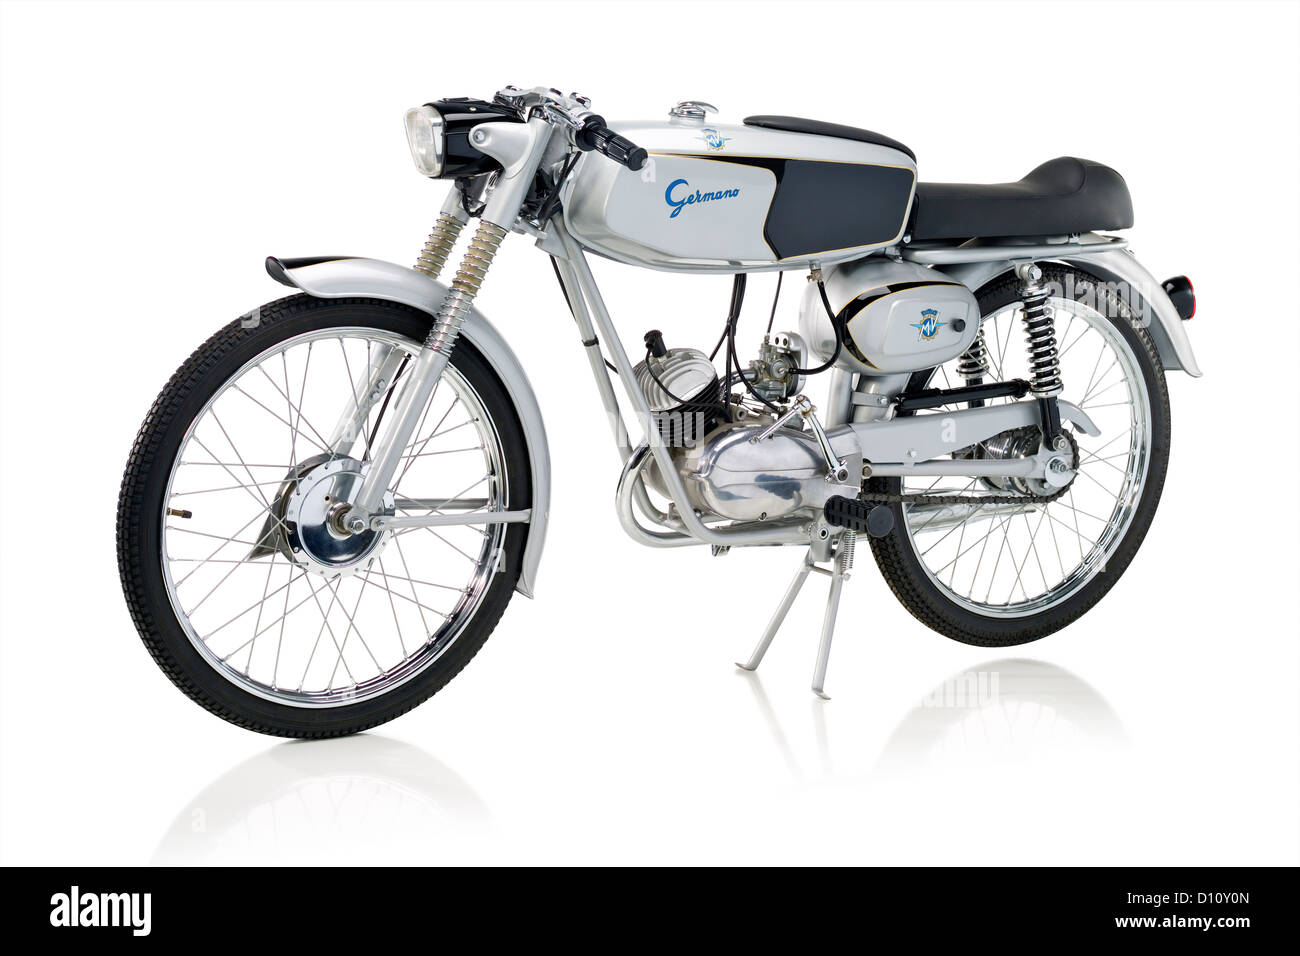 1966 MV Agusta Germano moto sport Banque D'Images